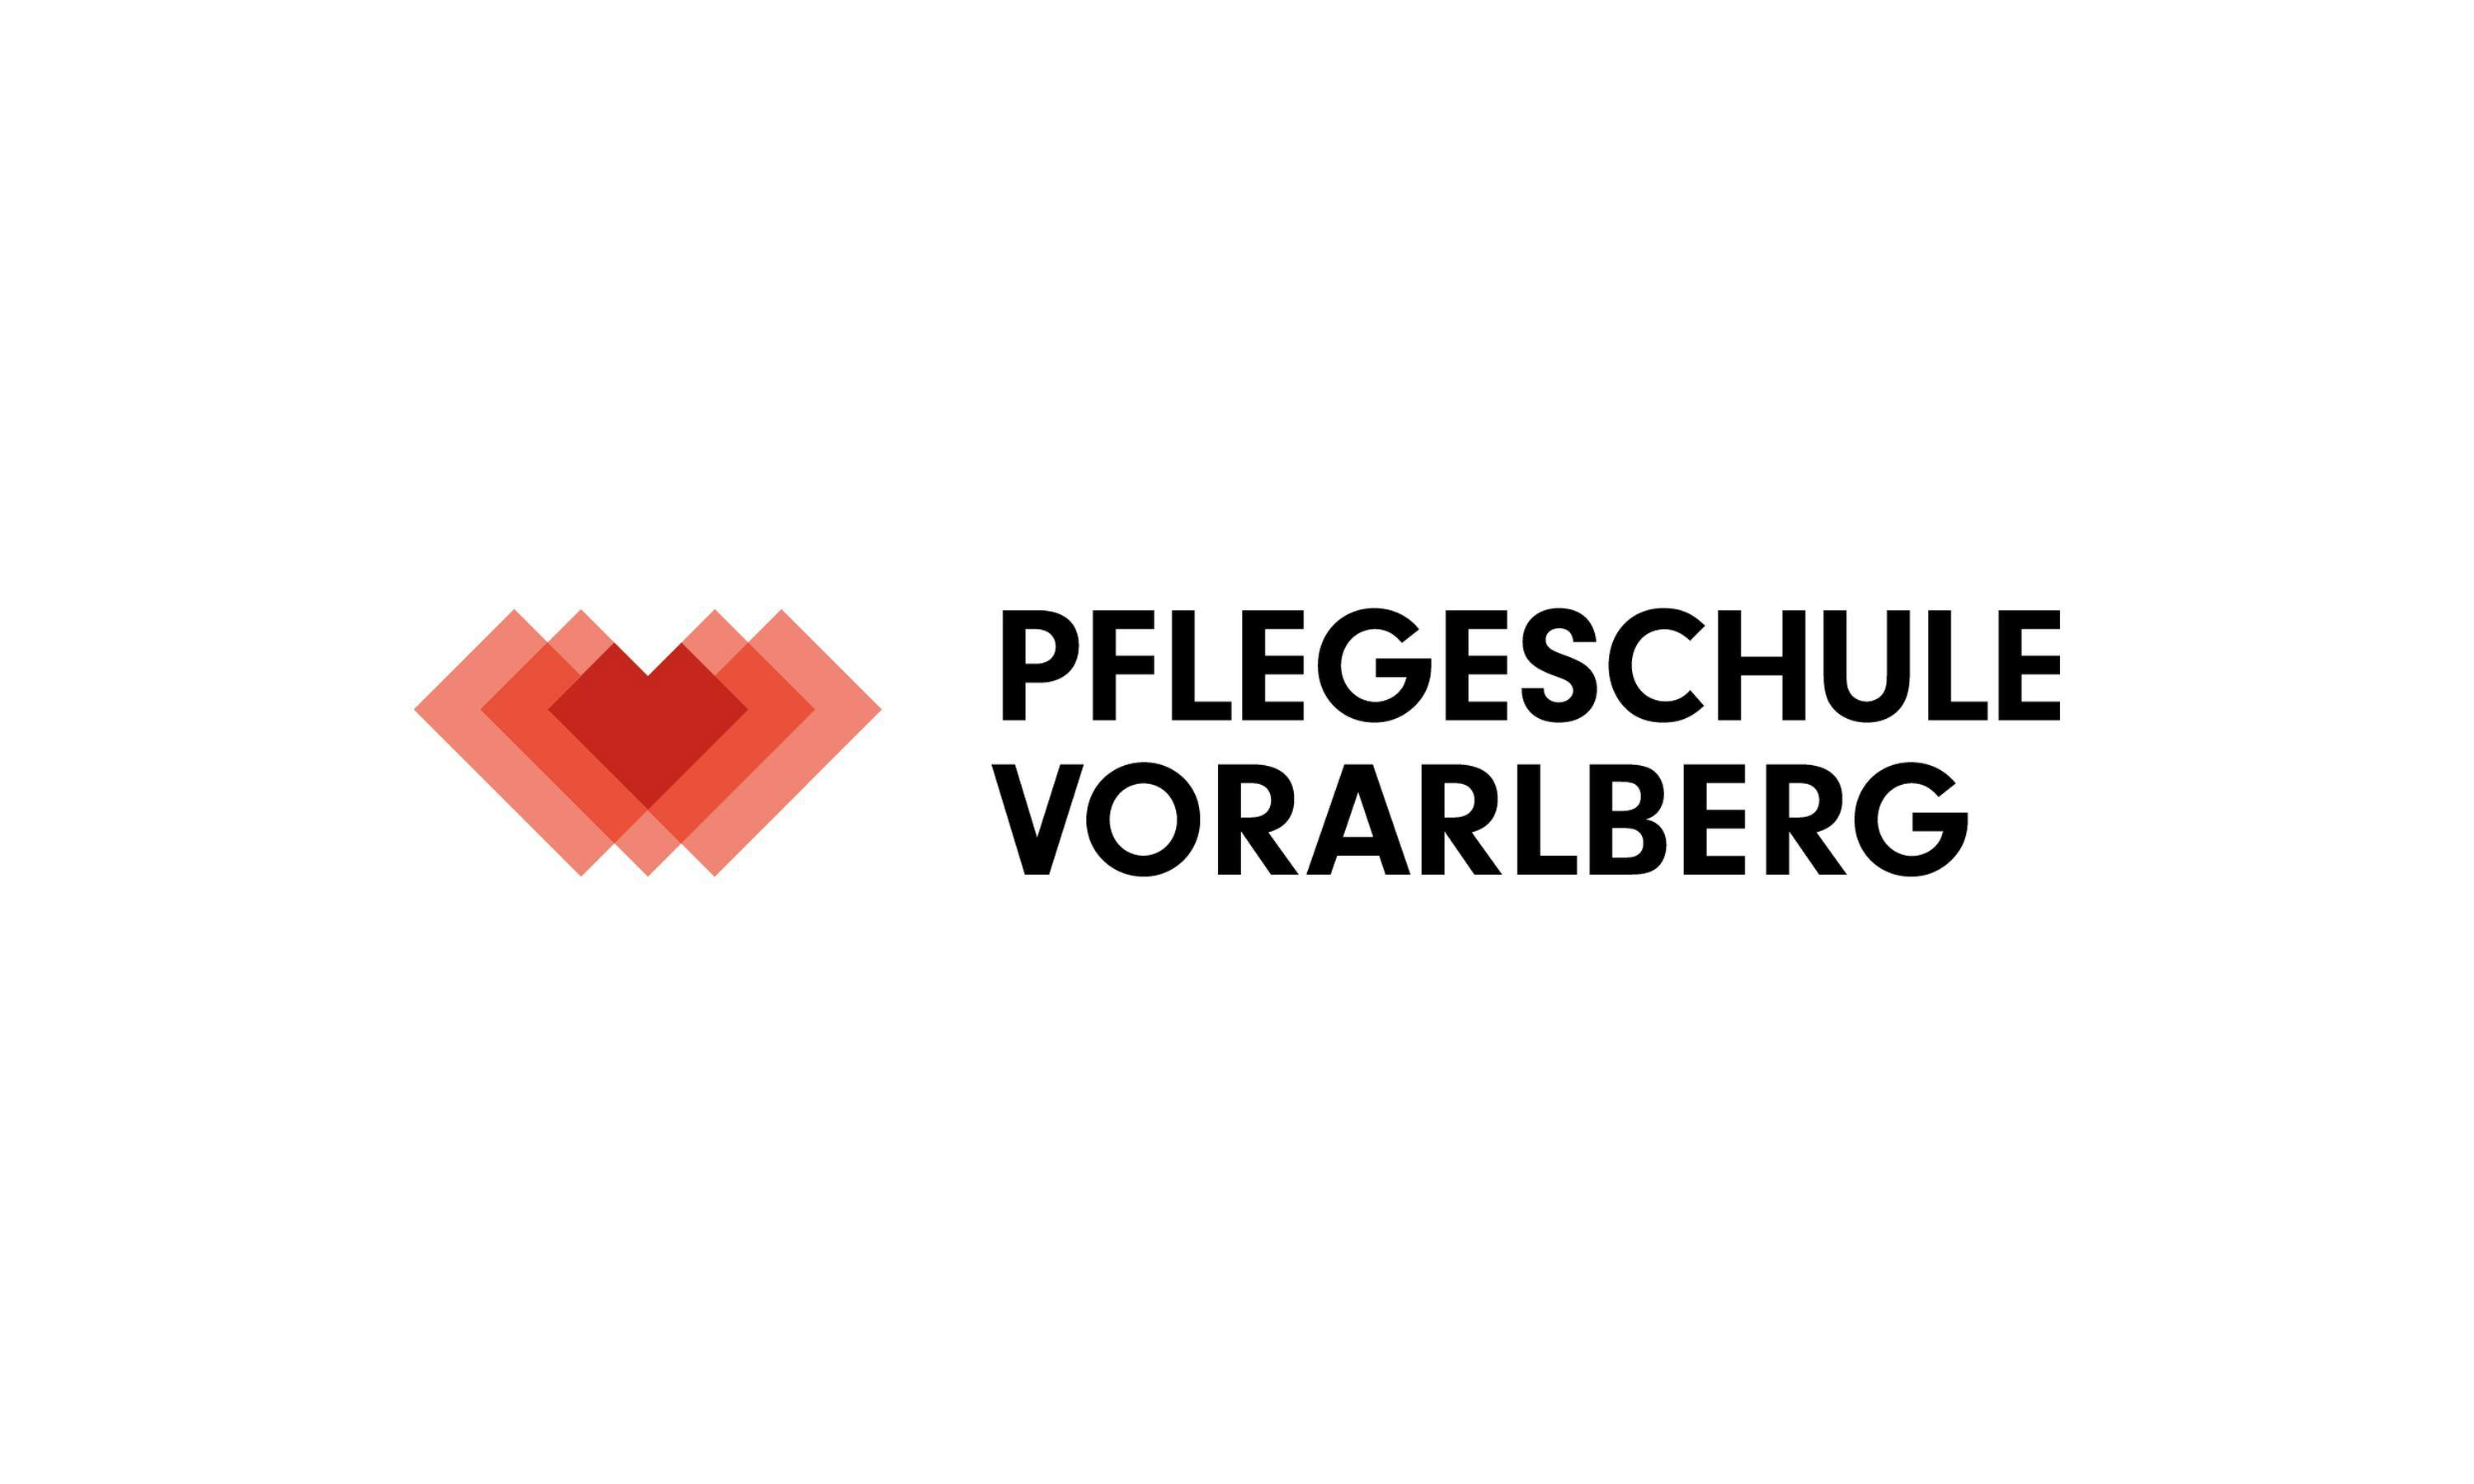 Pflegeschule Vorarlberg, Zeughaus Design © Zeughaus Design